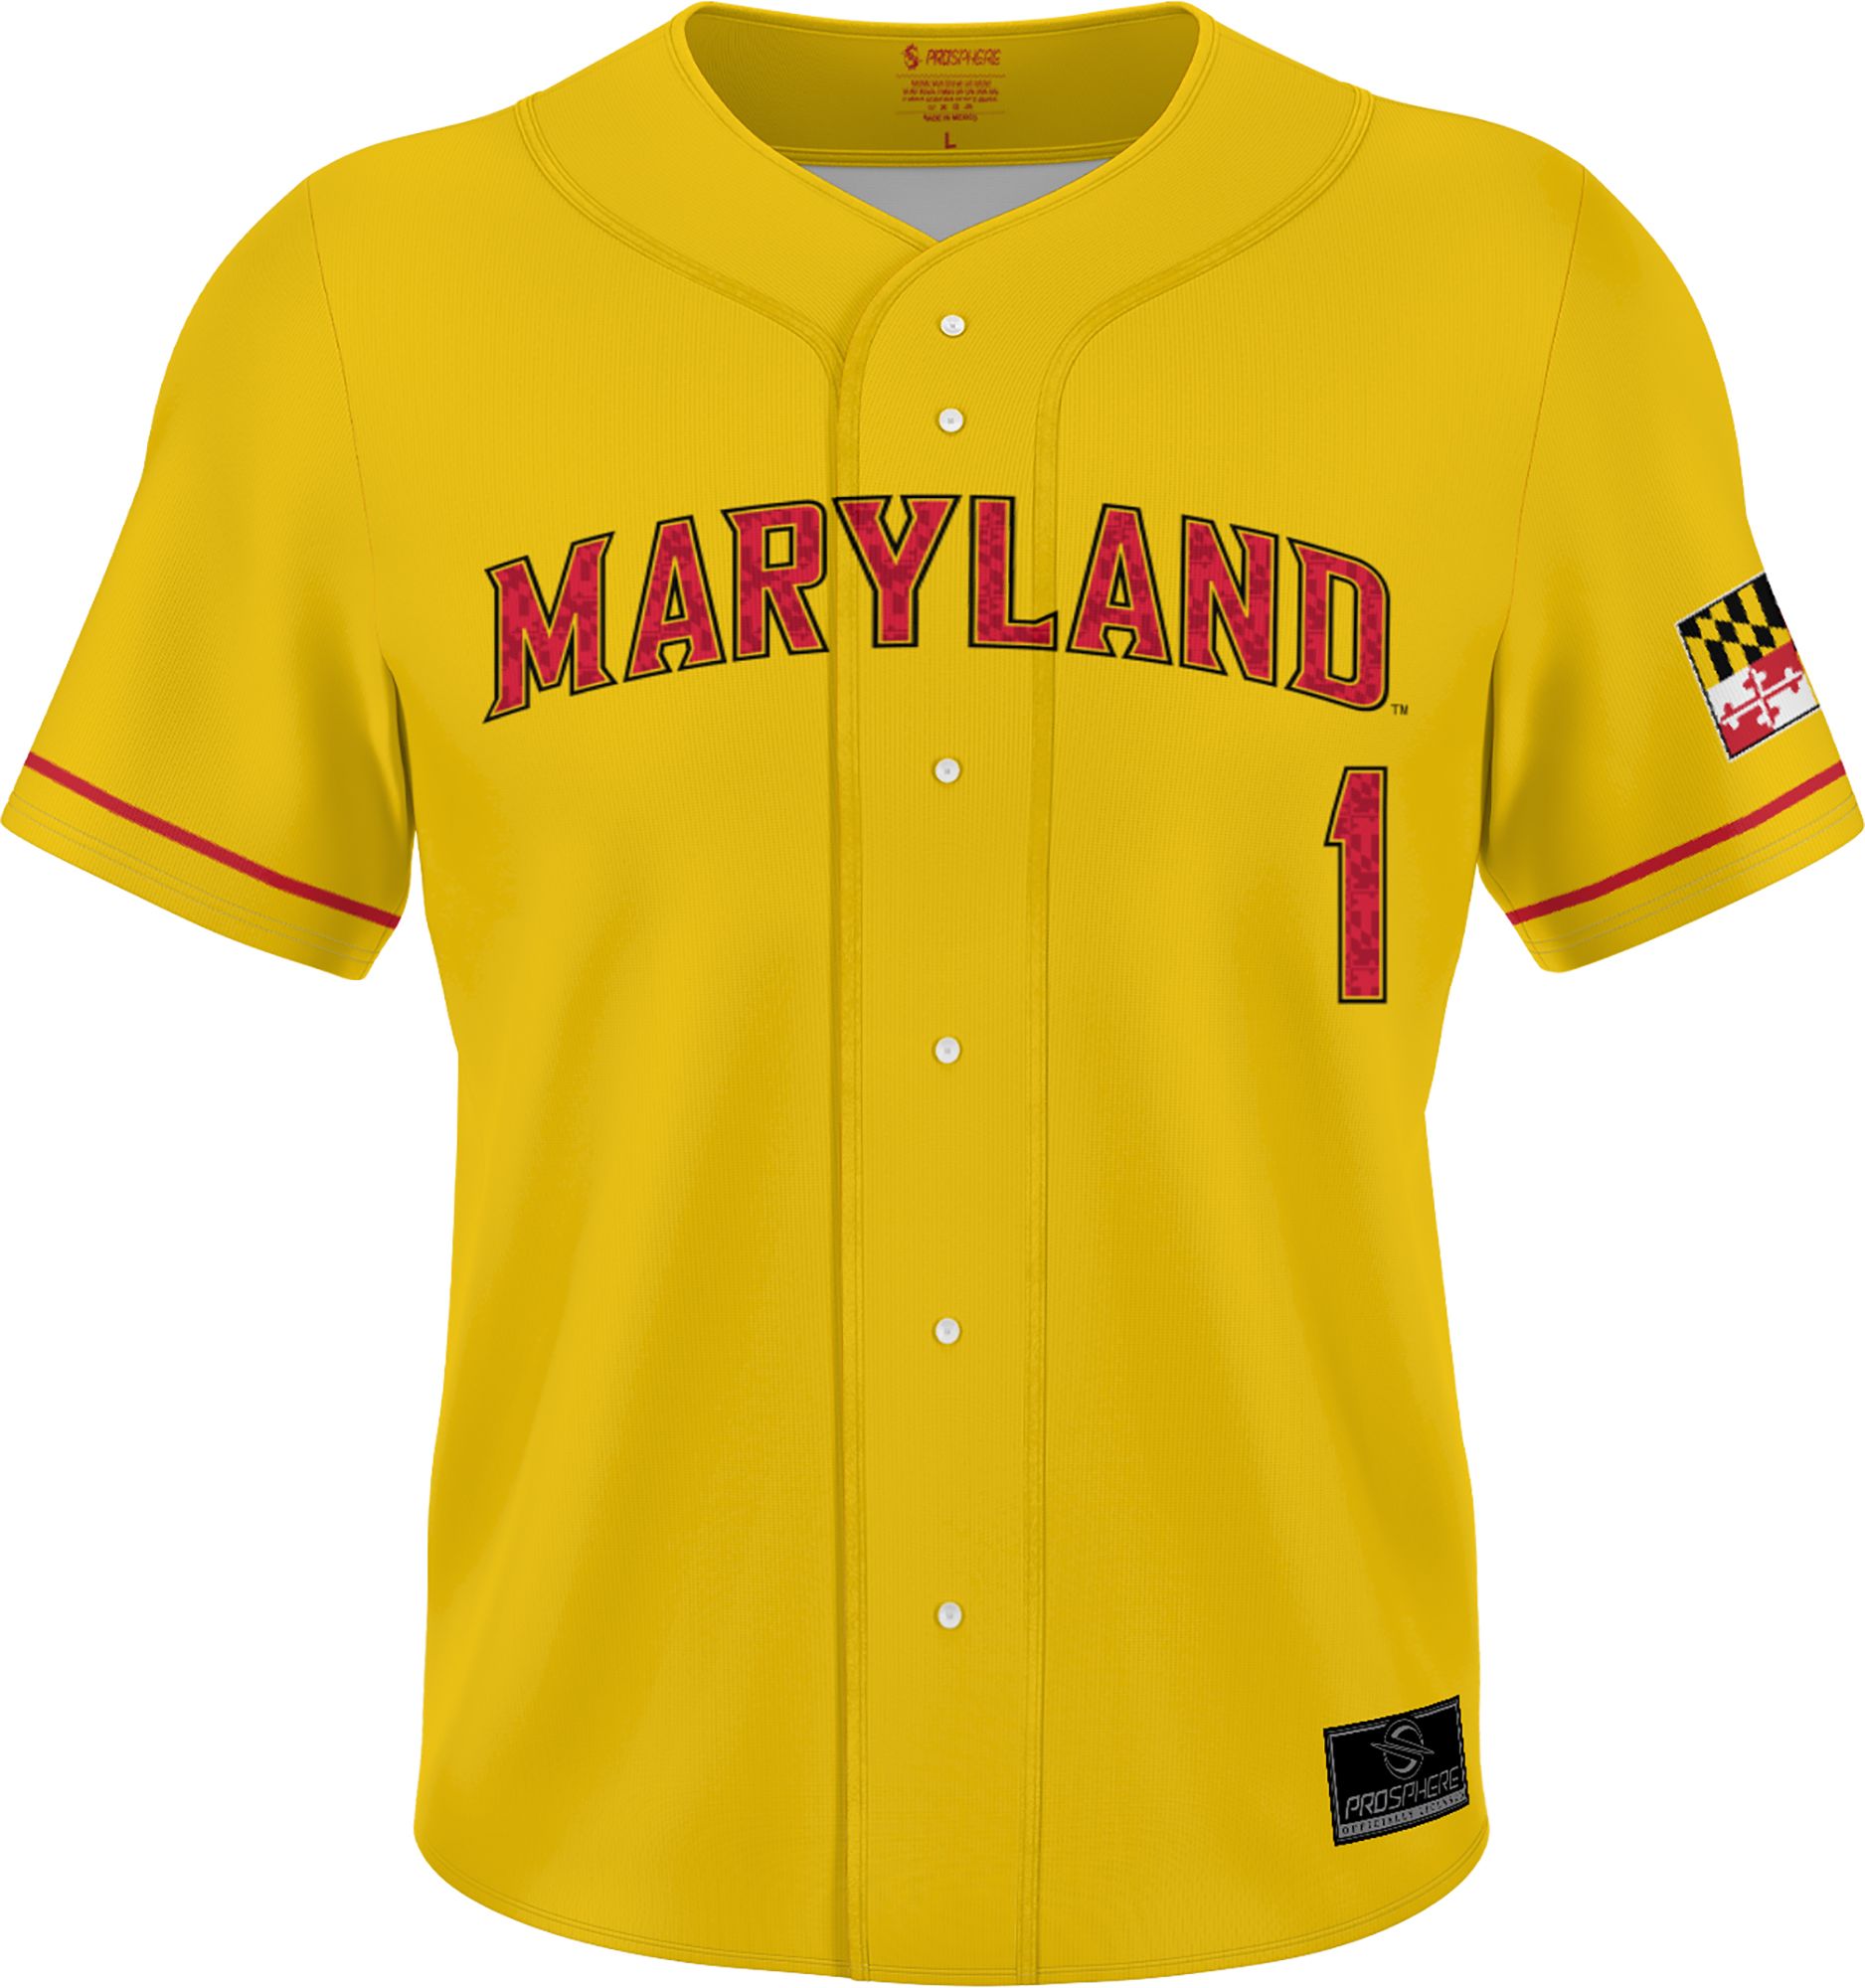 Prosphere Men's Maryland Terrapins #1 Gold Full Button Alternate Baseball Jersey